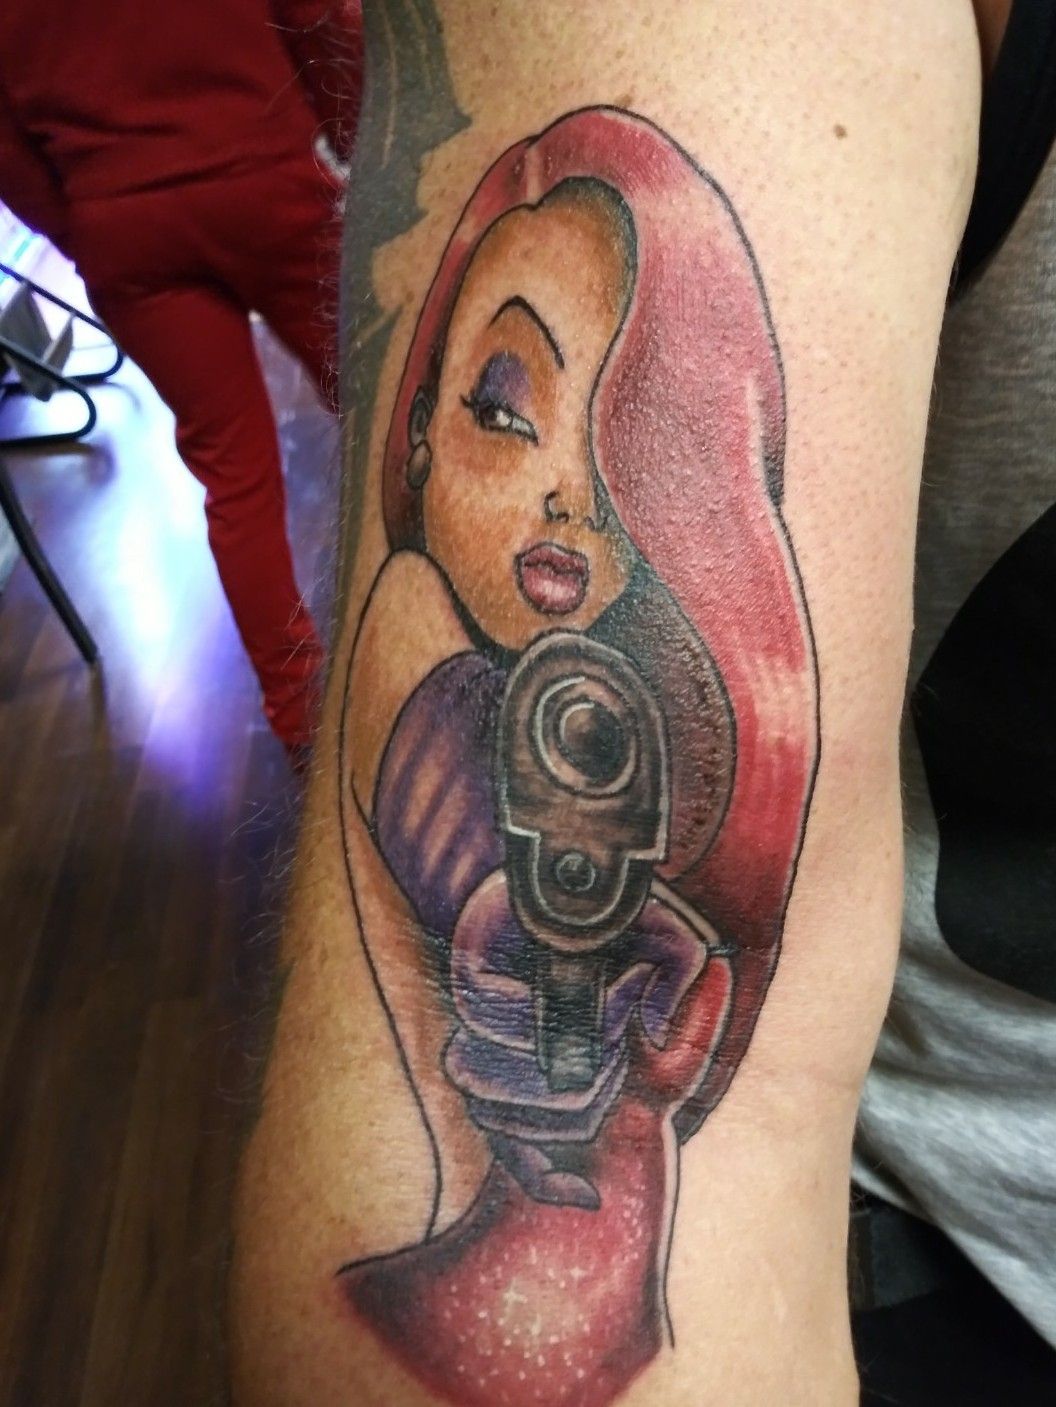 jessica rabbit with gun tattoo